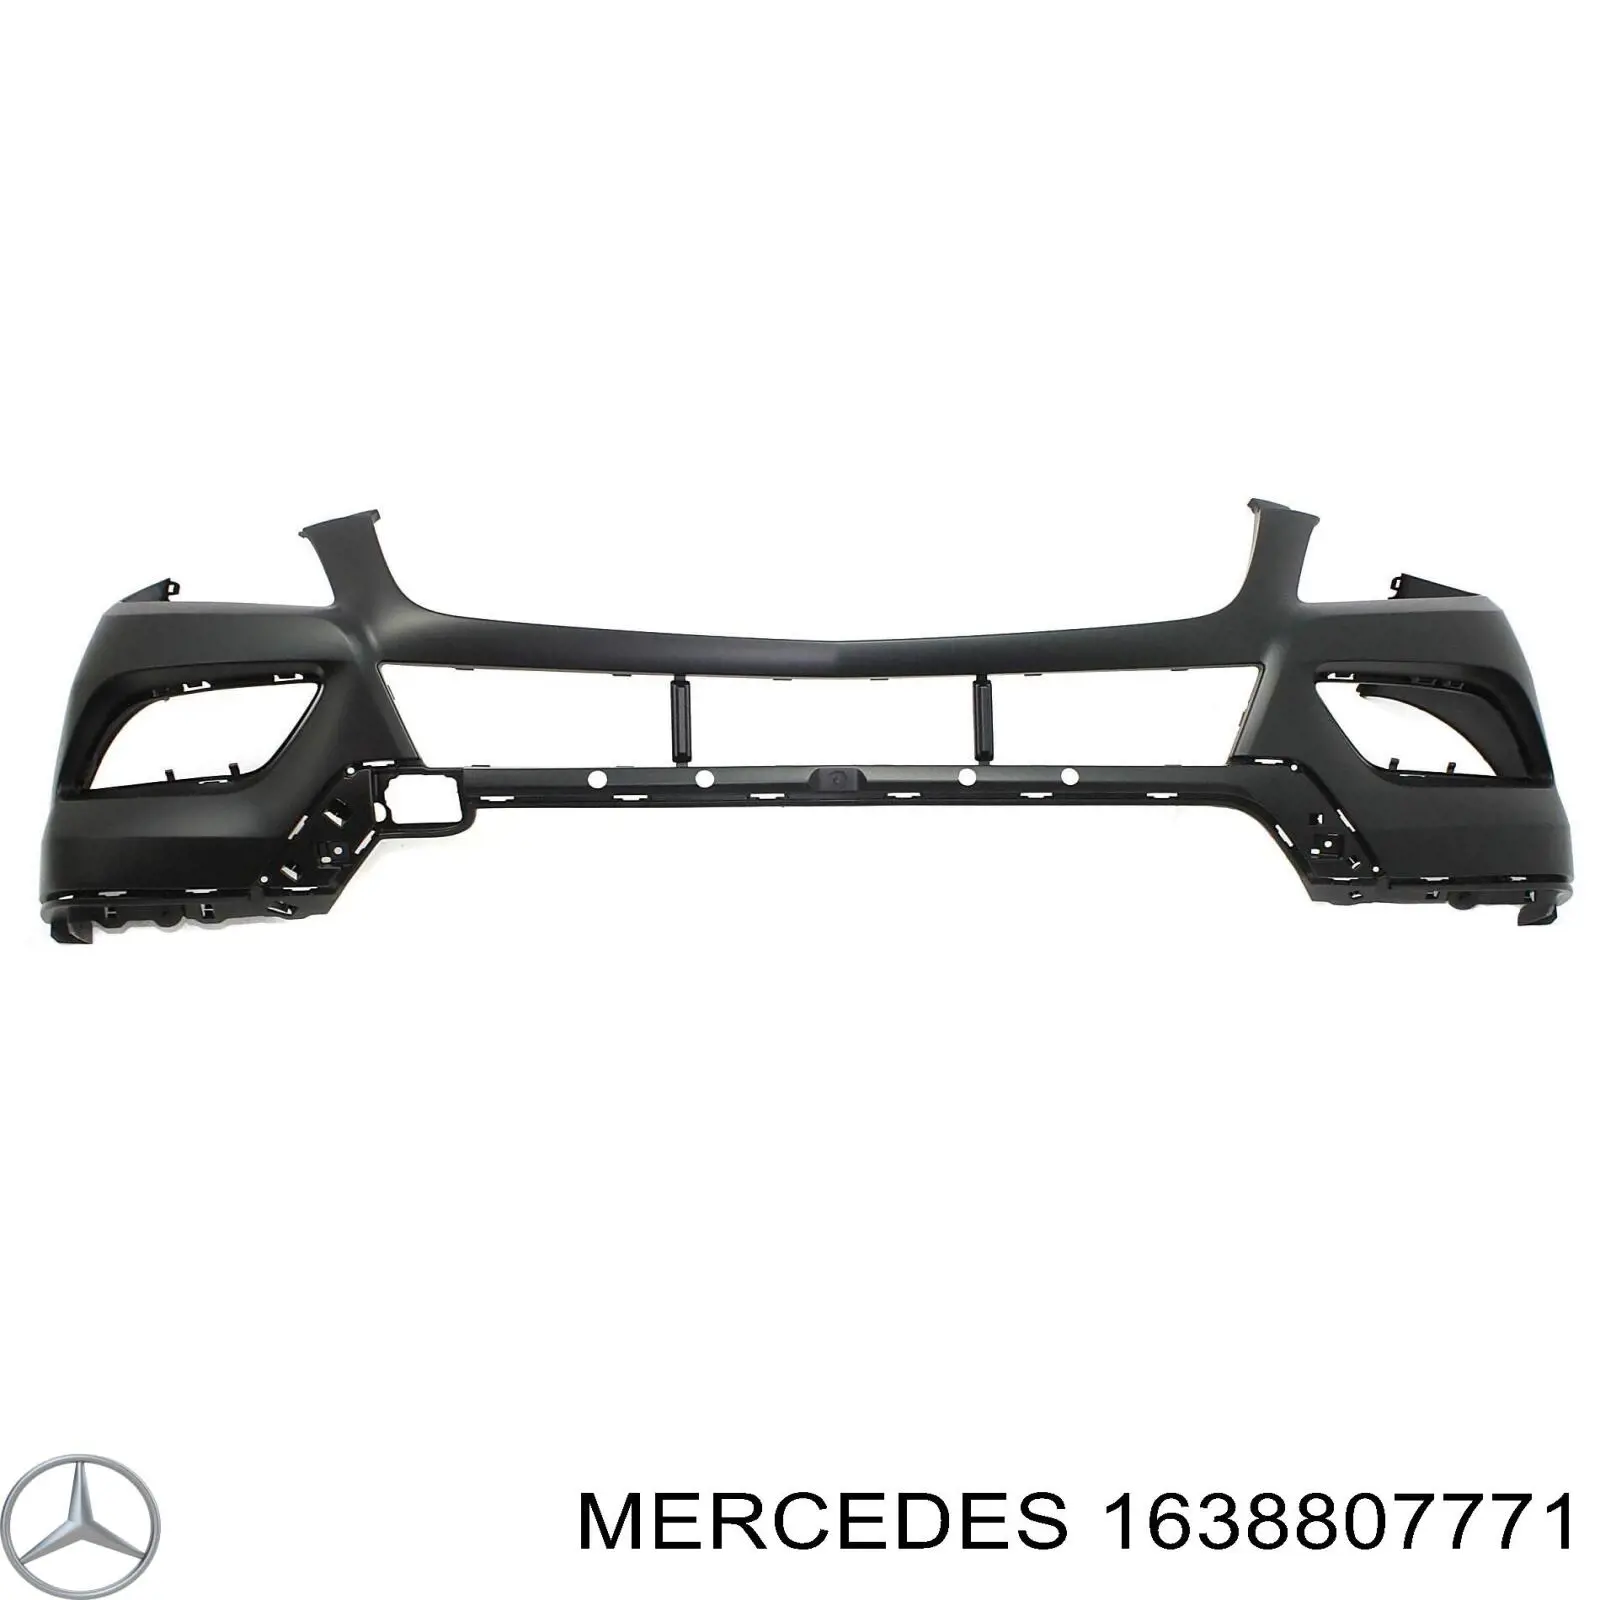 A1638807771 Mercedes parachoques trasero